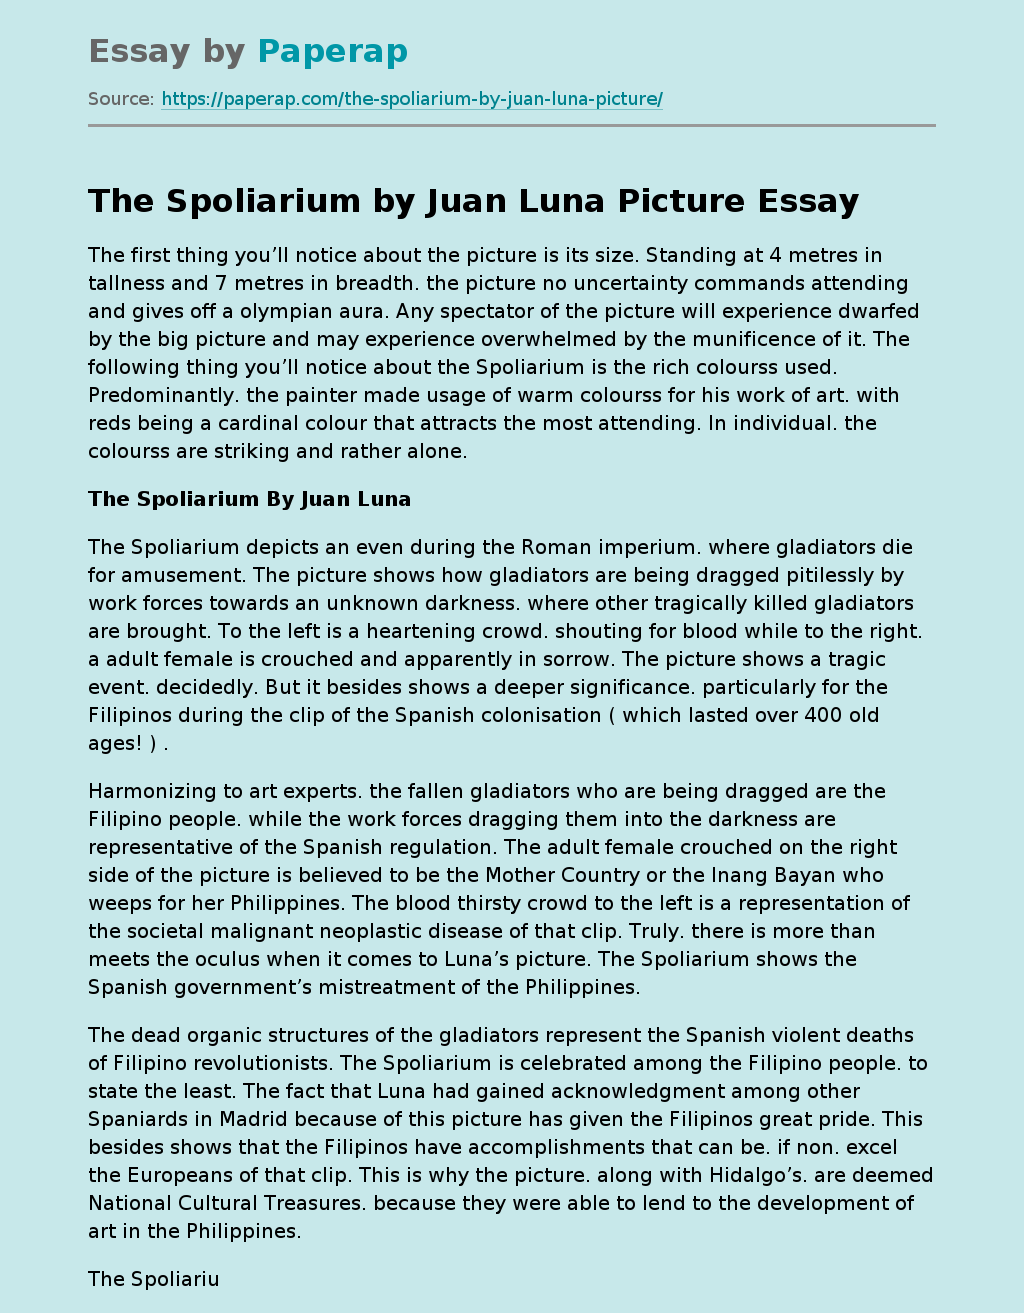 The Spoliarium by Juan Luna Picture